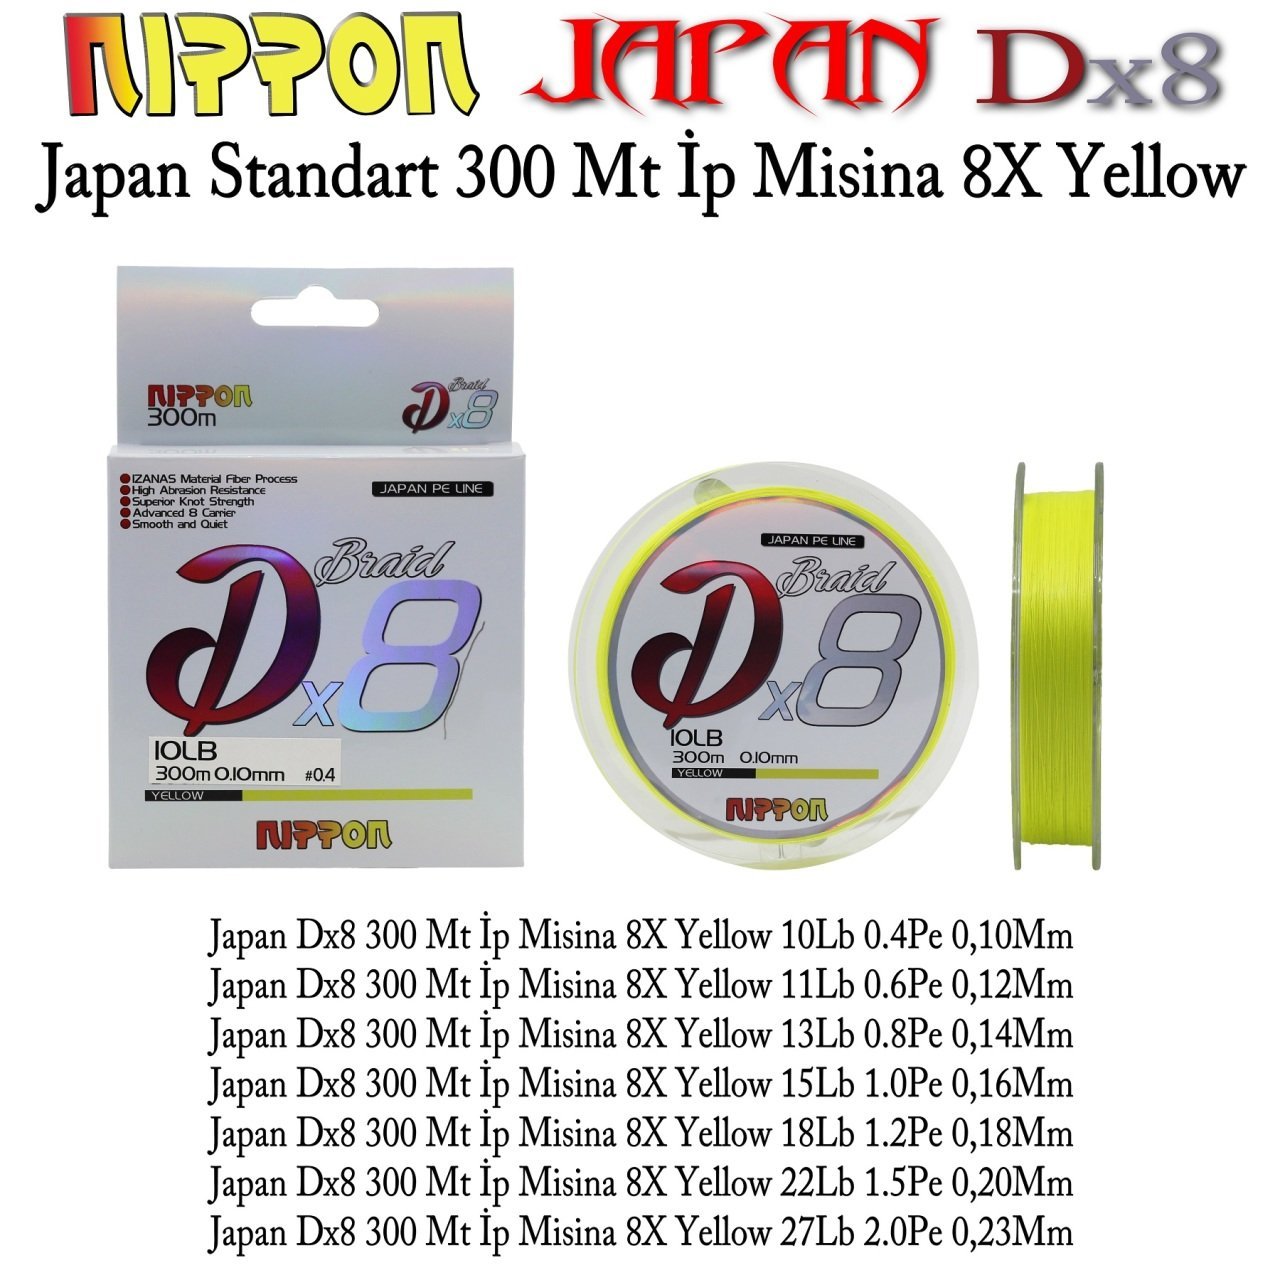 Japan Dx8 300 Mt İp Misina 8X Yellow 0,18 mm